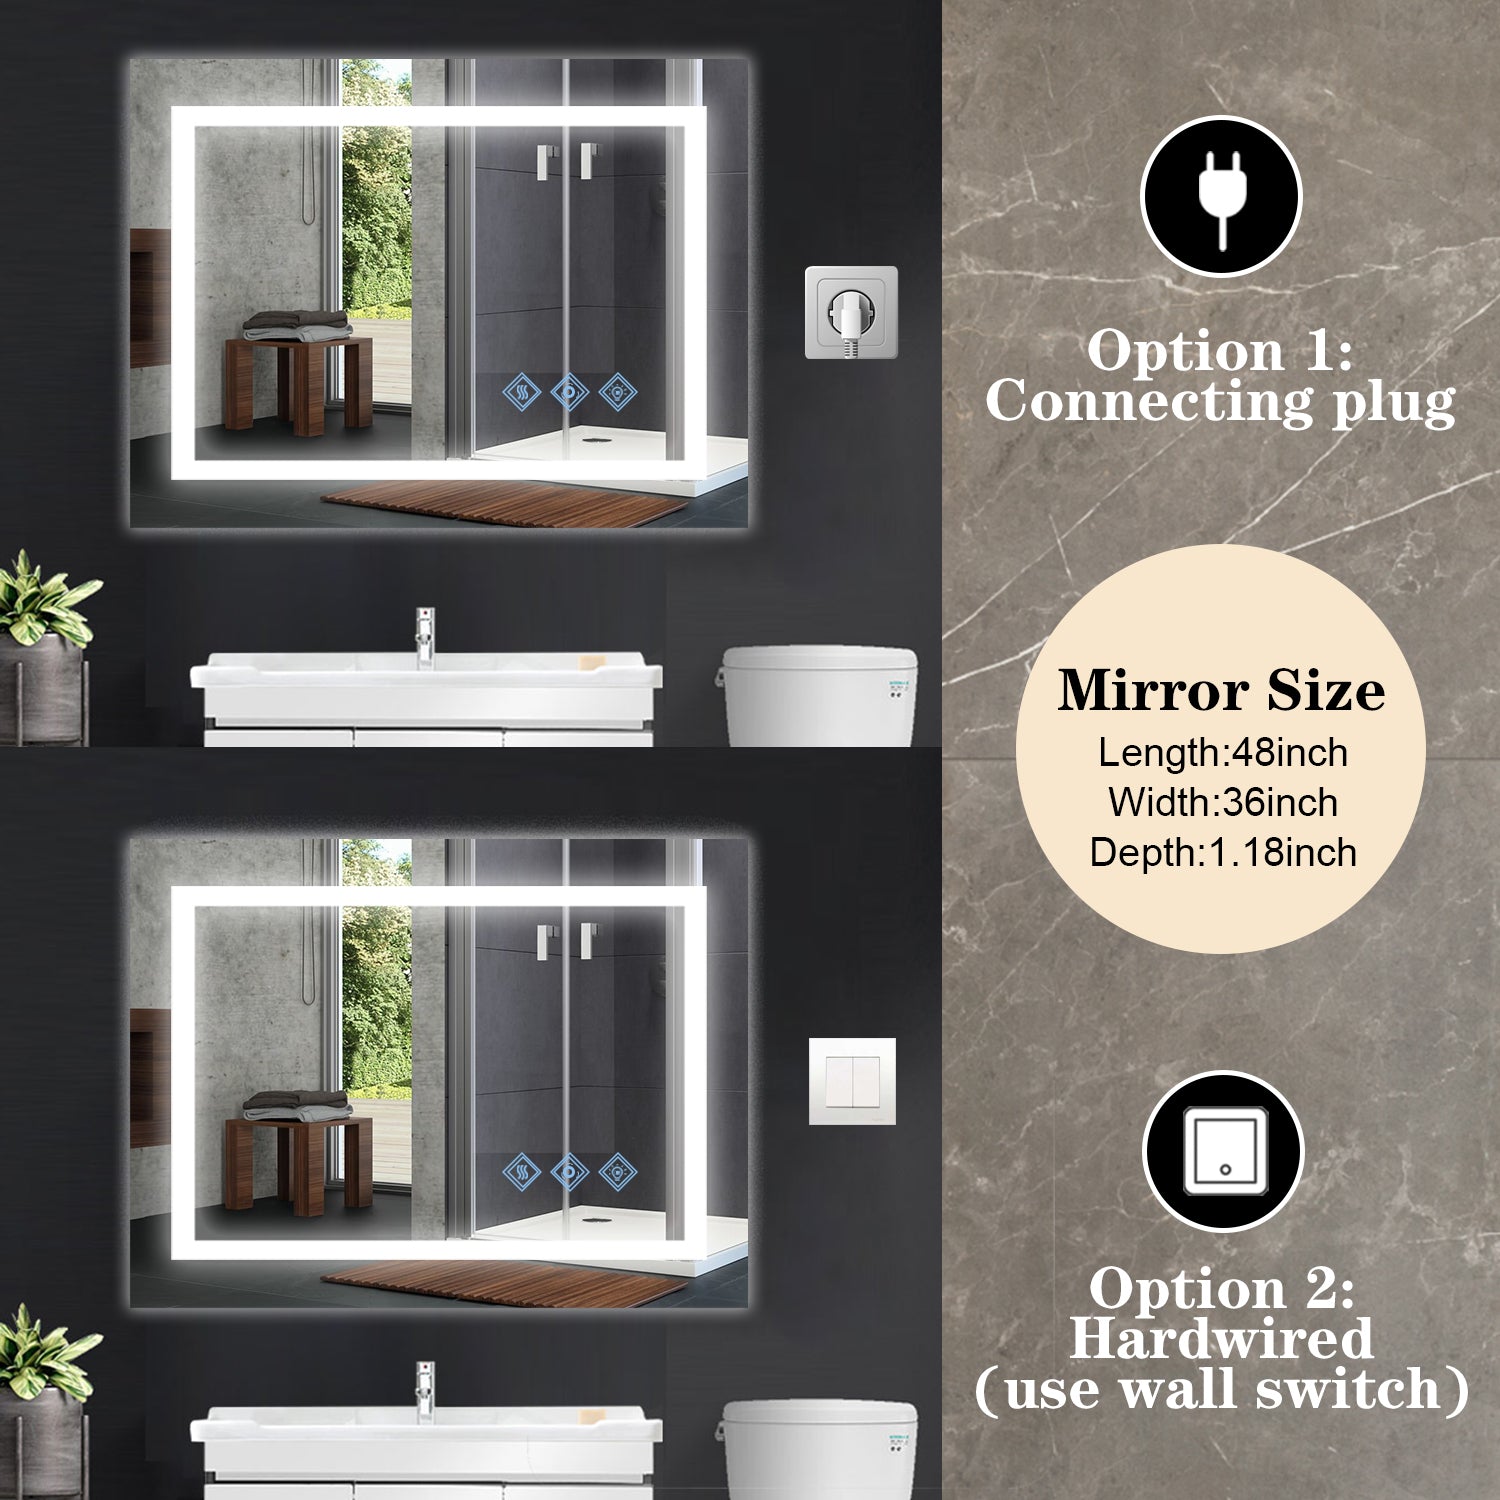 LED Bathroom Mirror, 3000-6000K Gradient Front and Backlit LED Mirror 48x36inch, IP54 Enhanced Anti-Fog